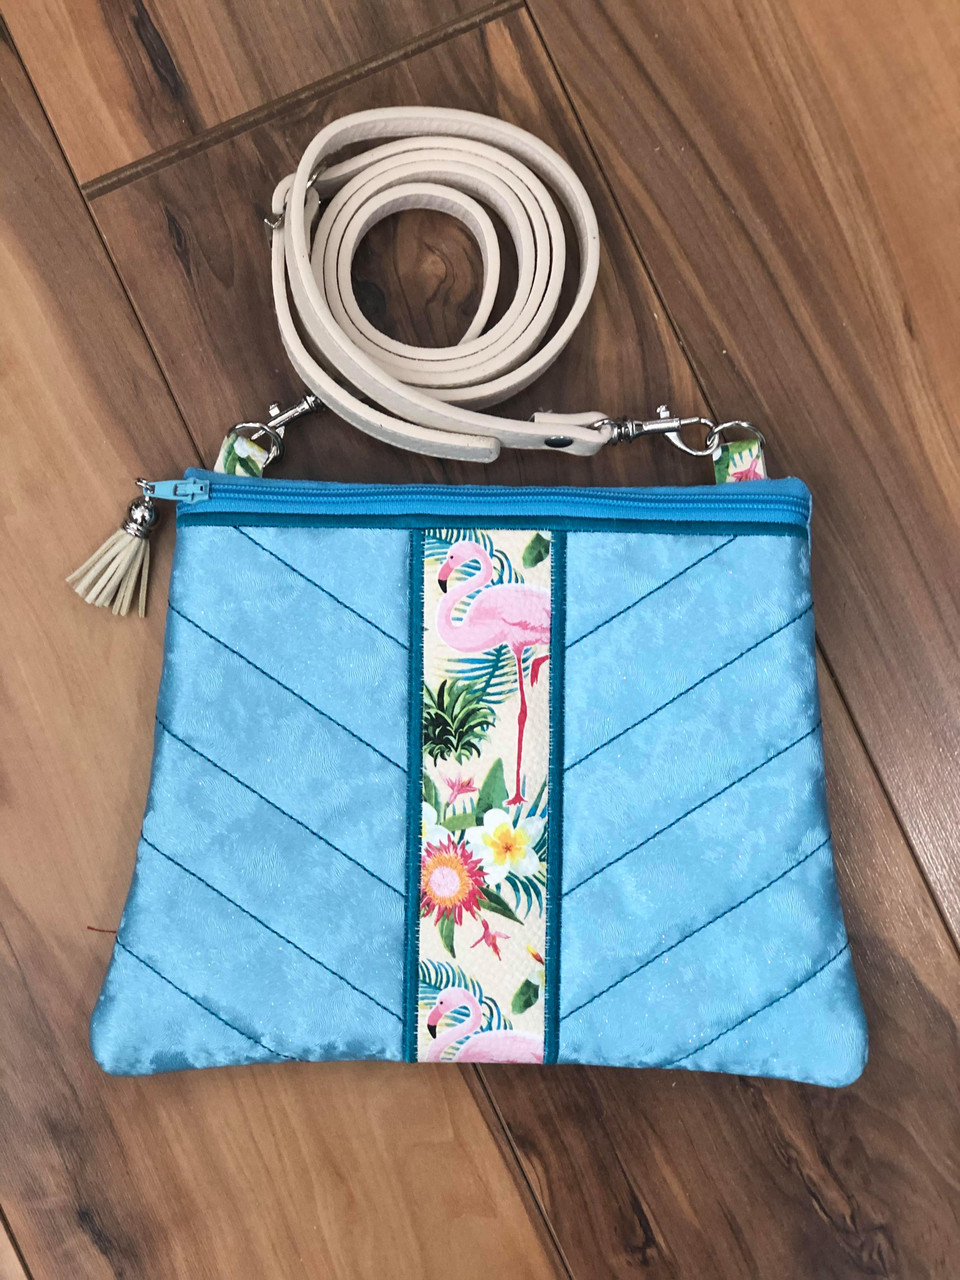 Amazon.com: ID 8504 Flower Design Purse Patch Handbag Fashion Embroidered  Iron On Applique